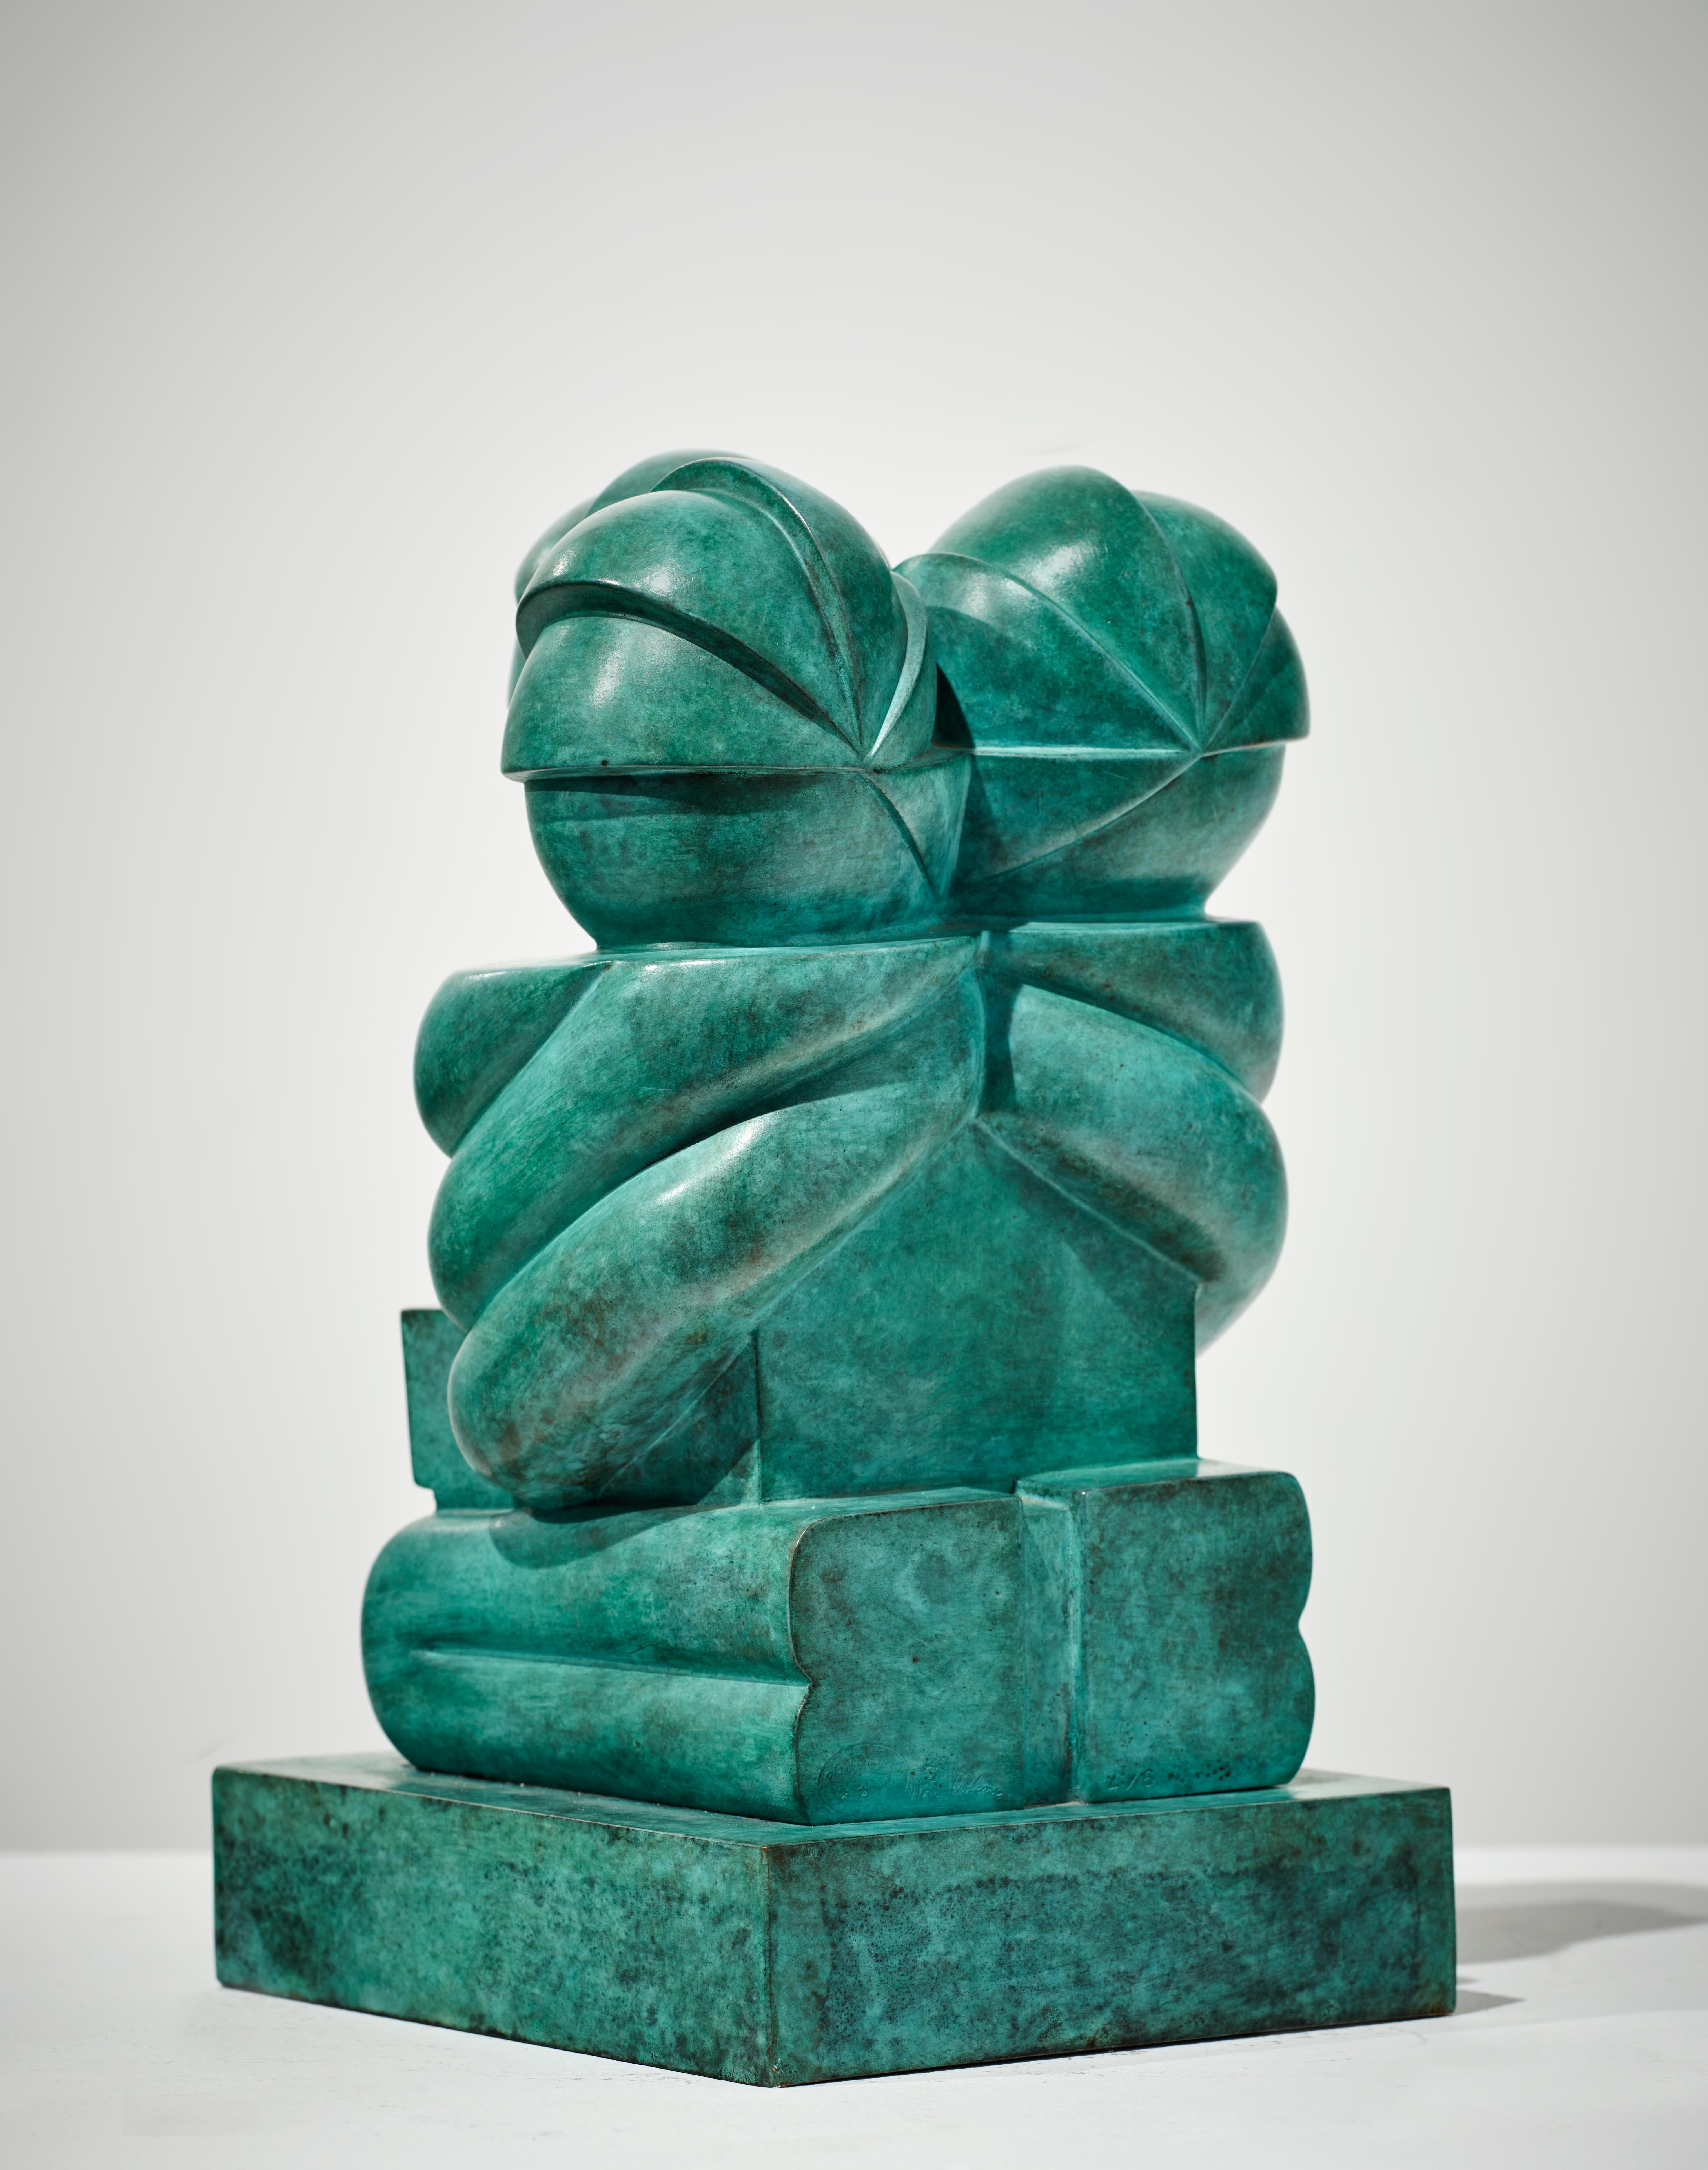 Familia 4/6 - Contemporary Sculpture by Franco Adami